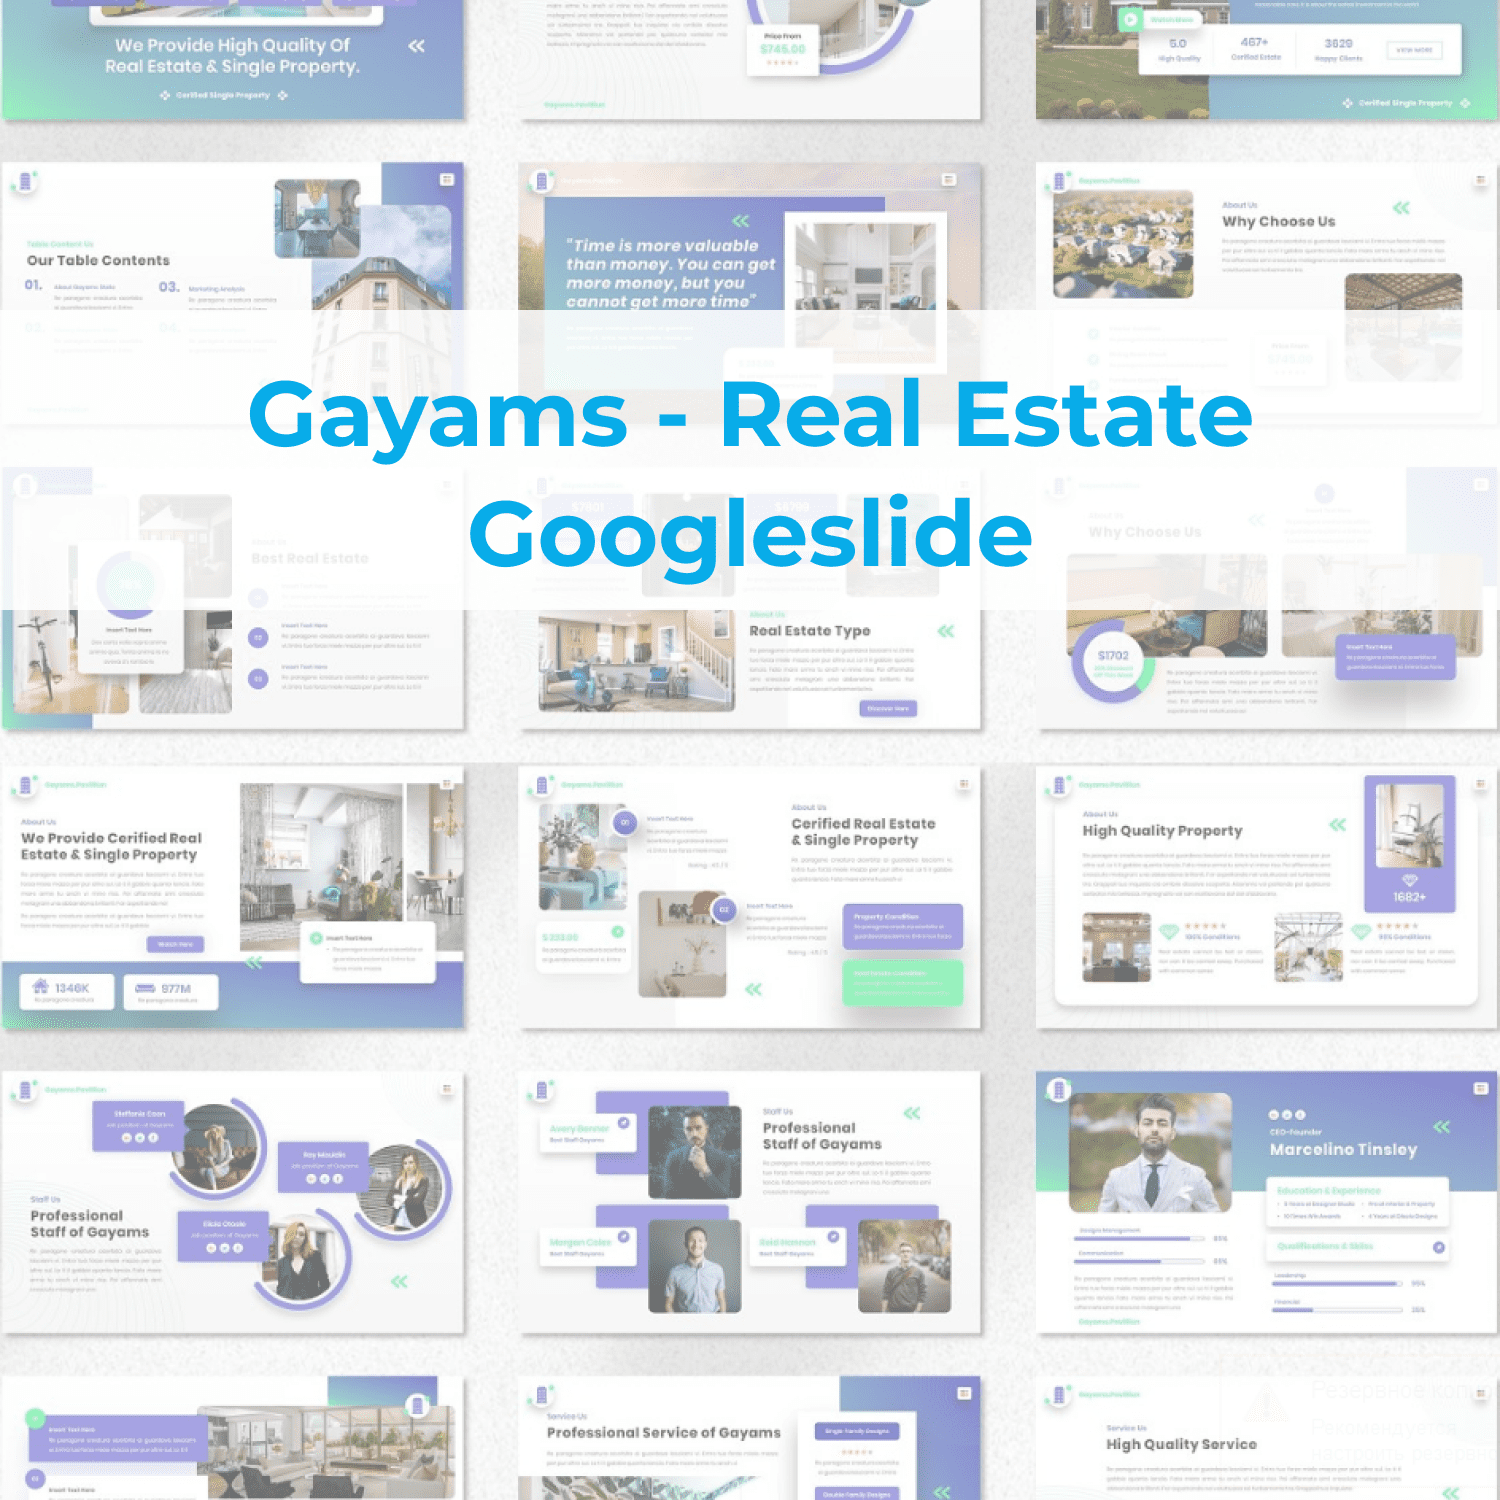 Gayams - Real Estate Googleslide cover image.